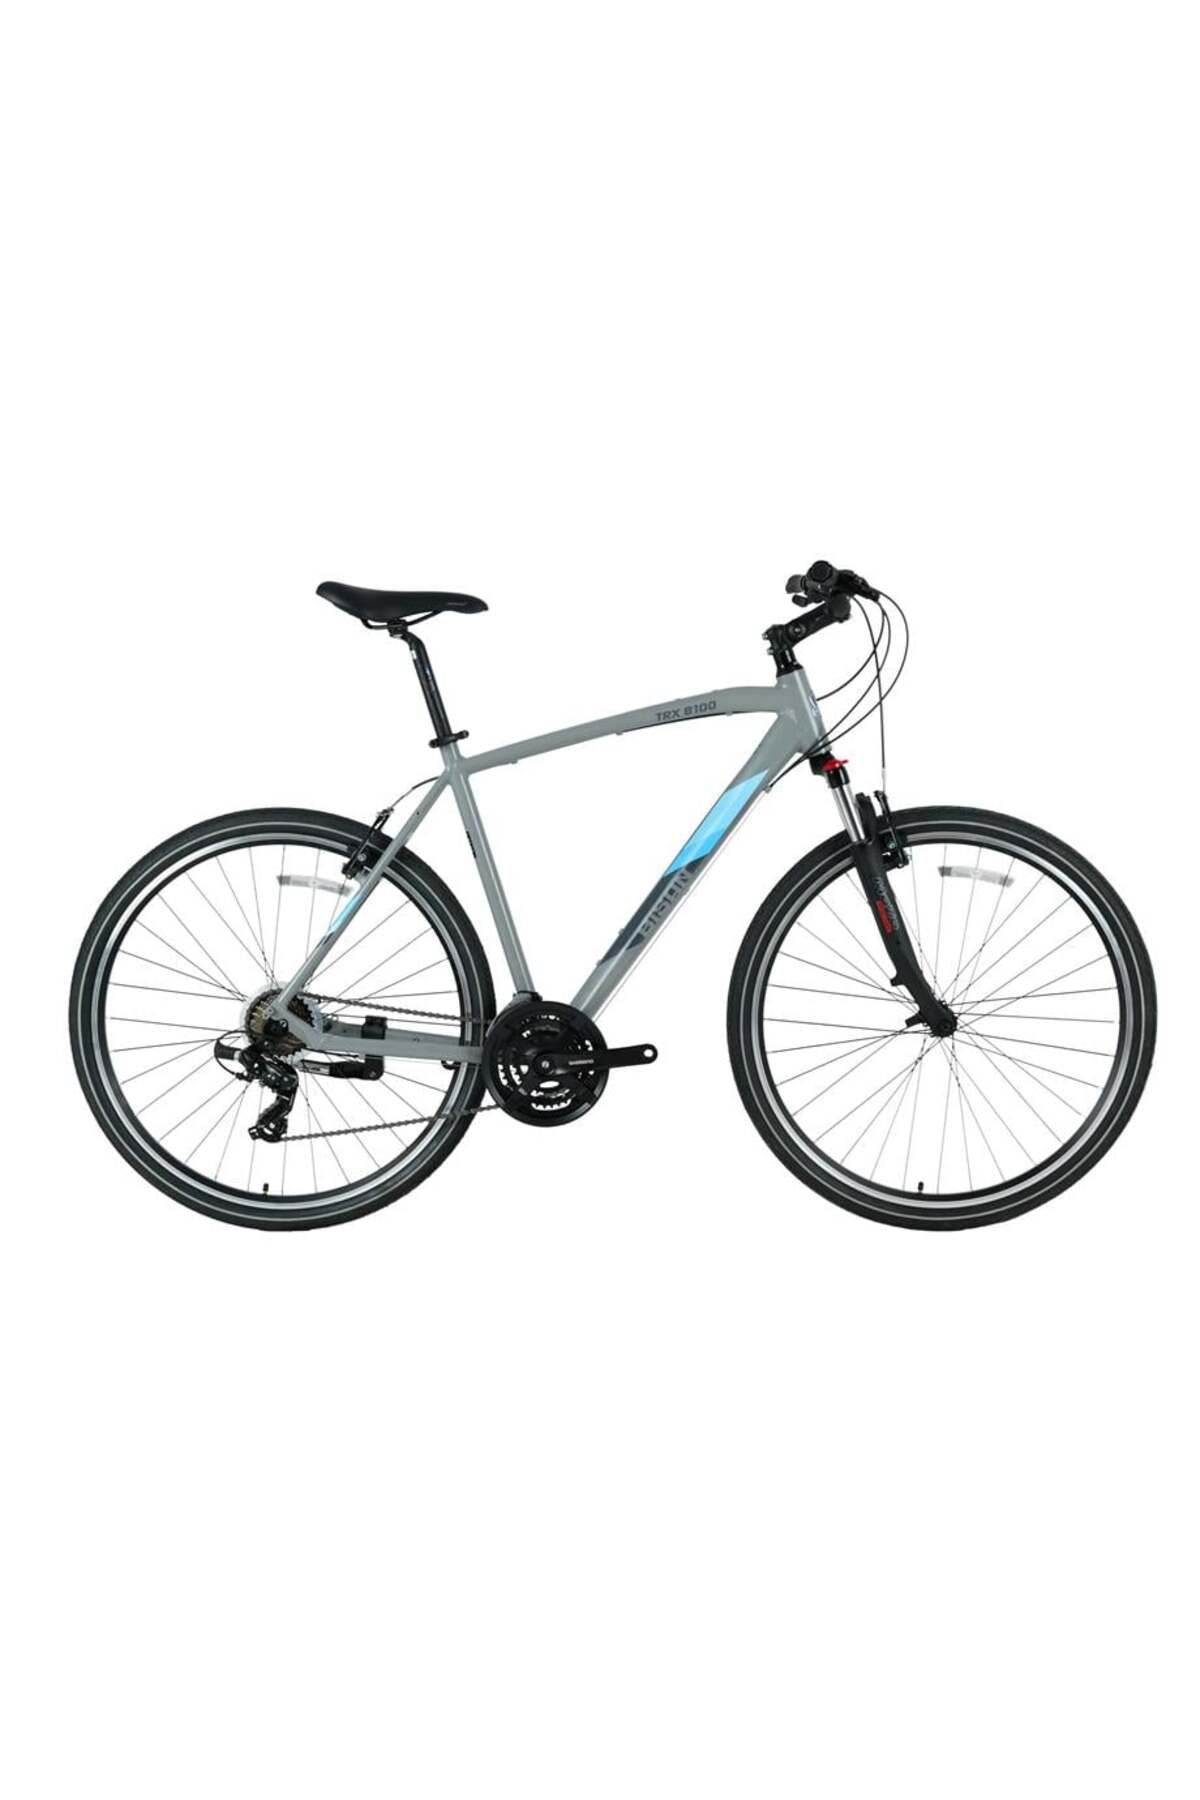 Bisan Trx 8100 Erkek Şehir Bisikleti 50cm V 28 Jant 21 Vites Açık Metalik Gri Yeşil Beyaz